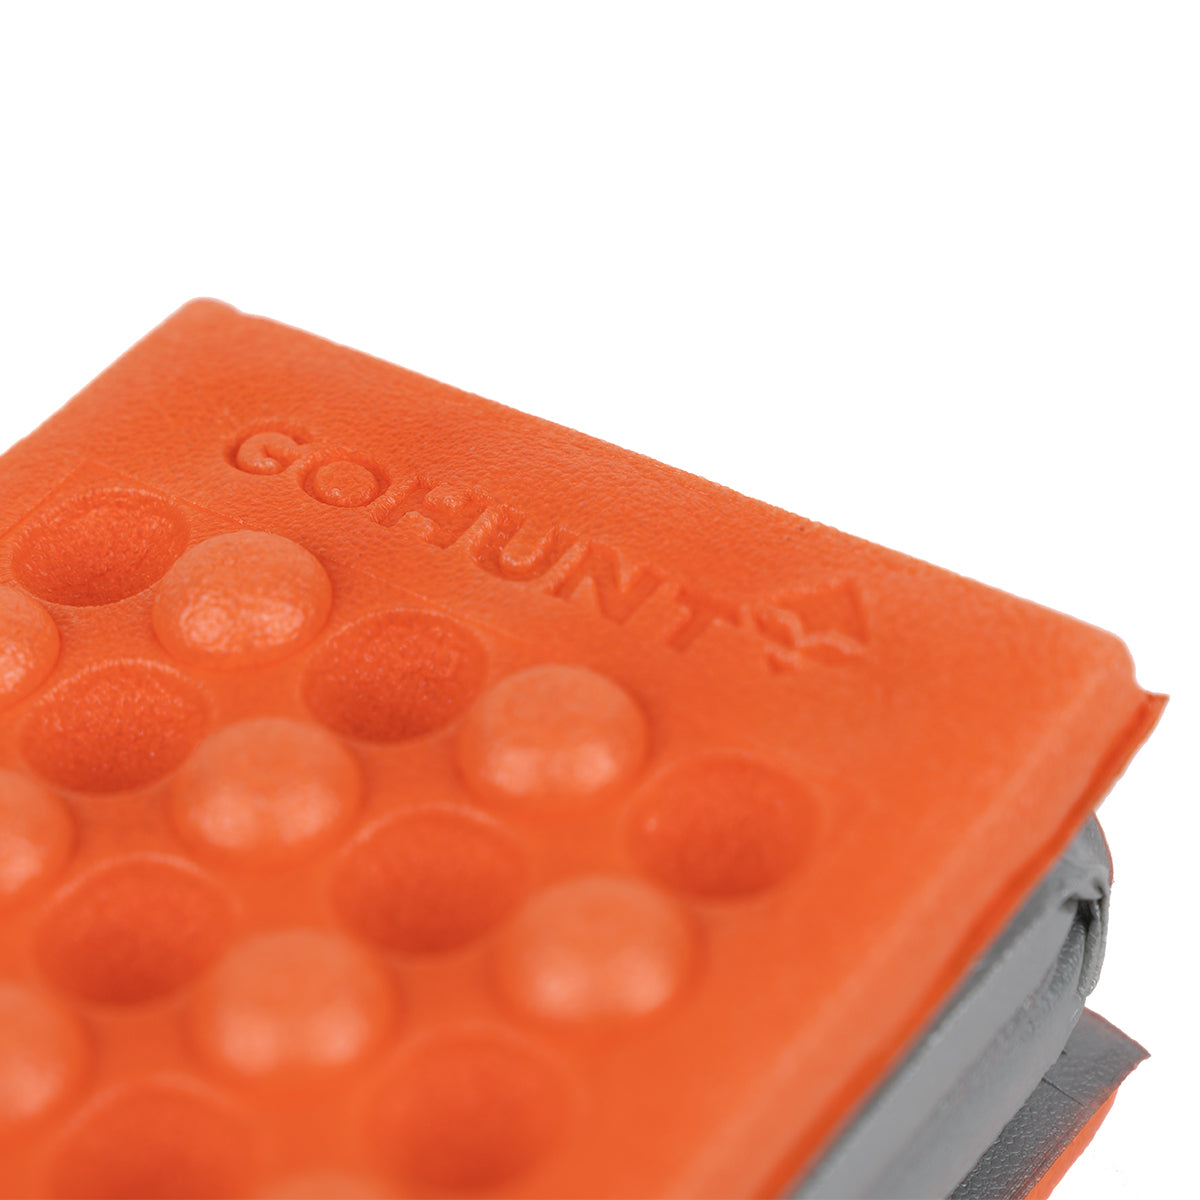 GOHUNT Glassing Pad in  by GOHUNT | GOHUNT - GOHUNT Shop